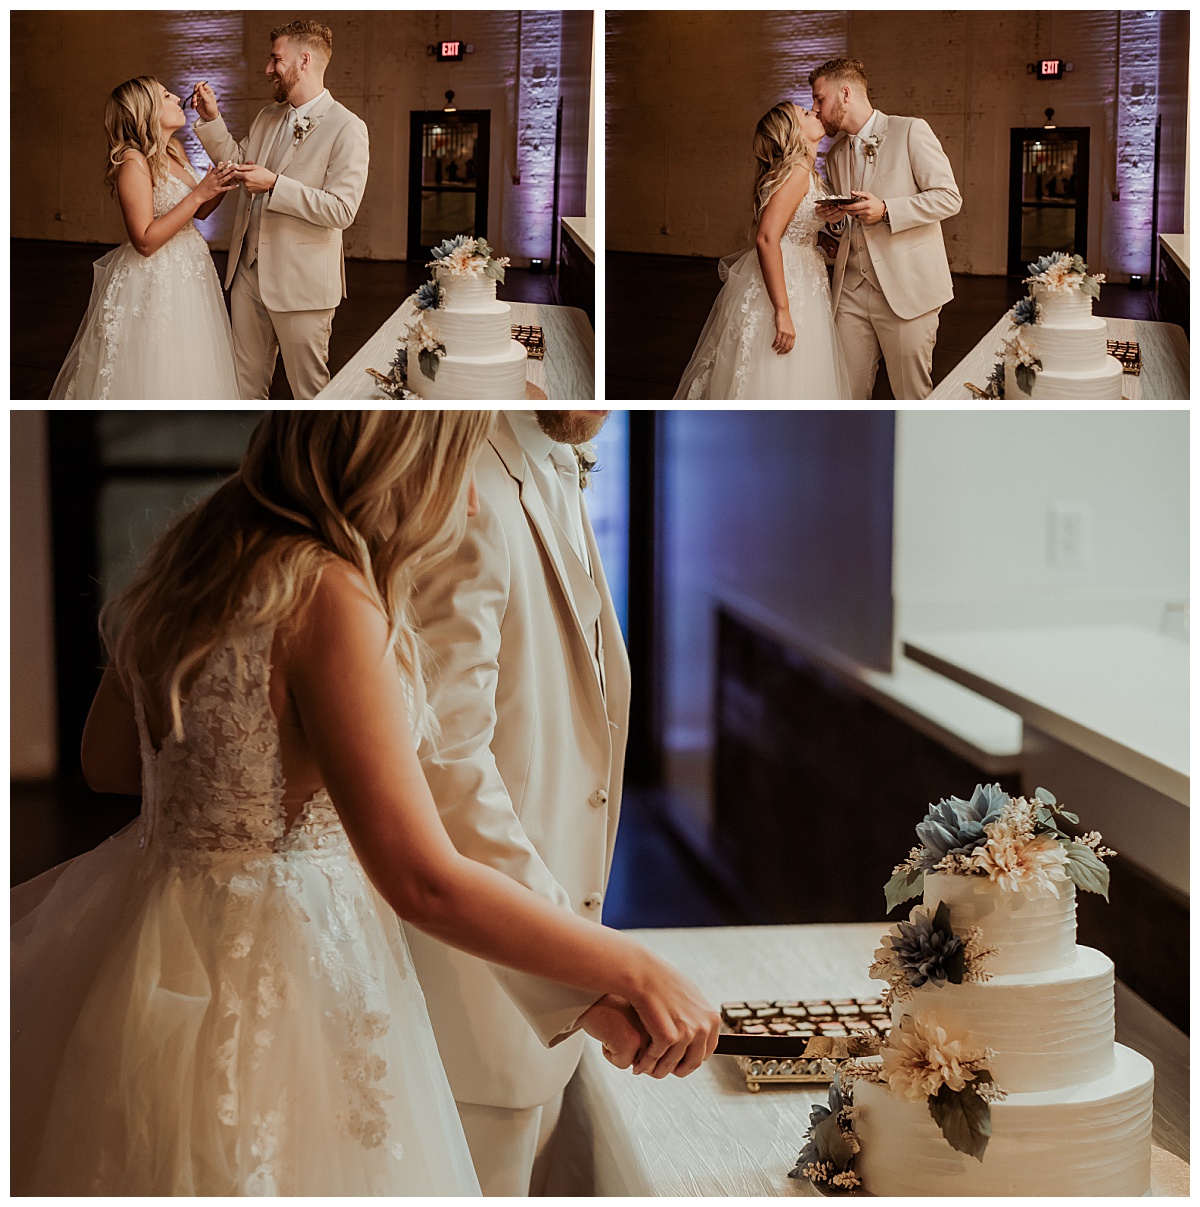 Bride and groom cut the wedding cake. 